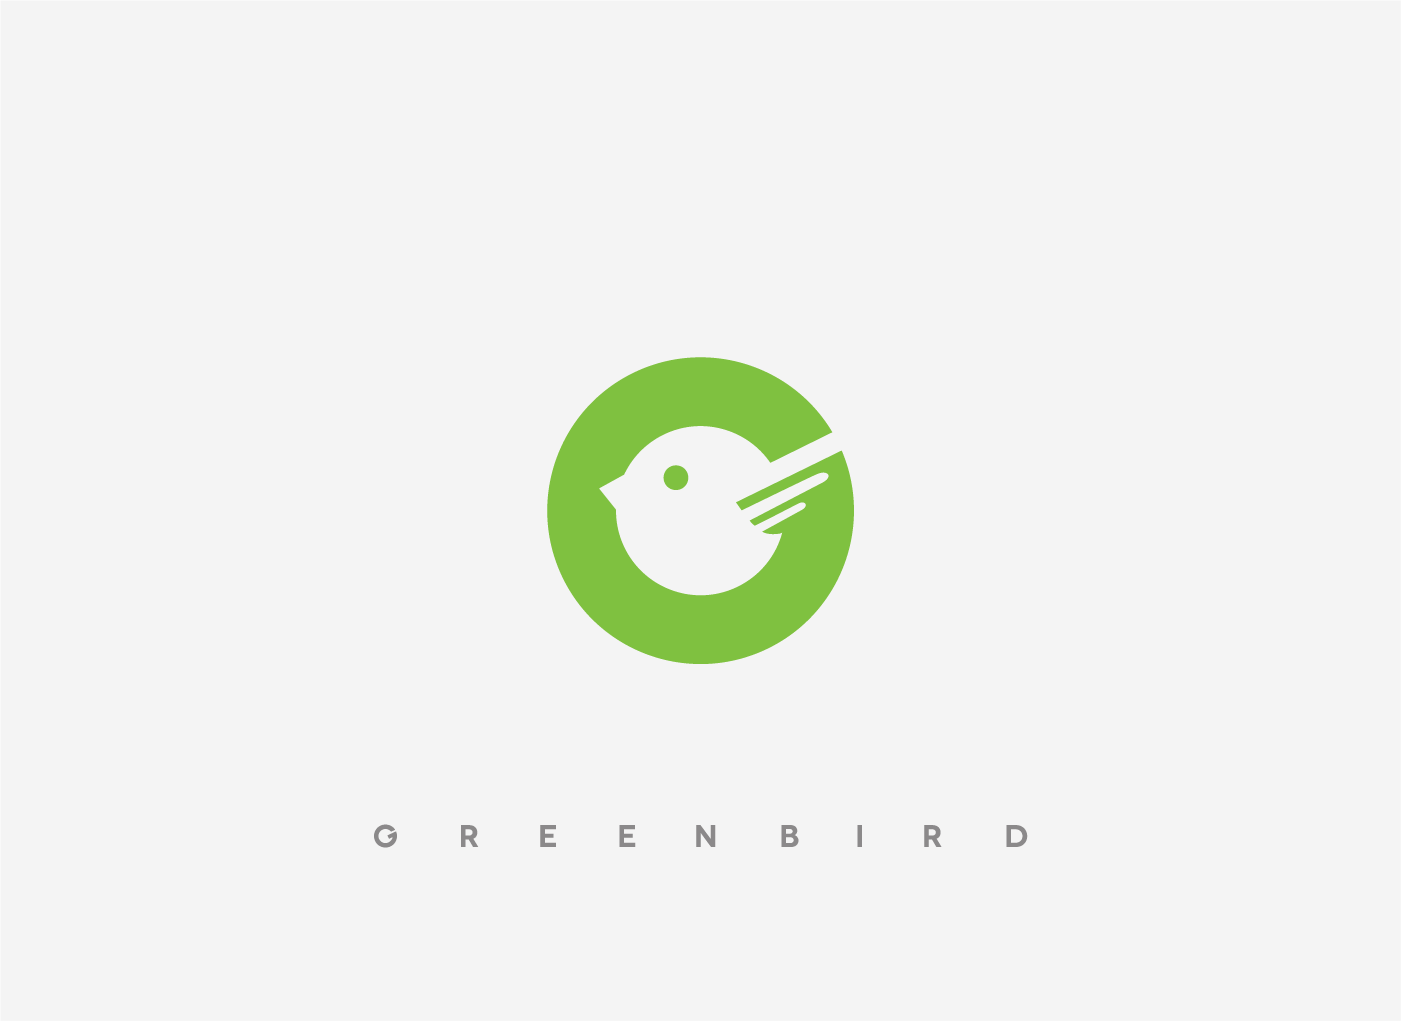 Green Bird Logo - Green Bird - andretidesign